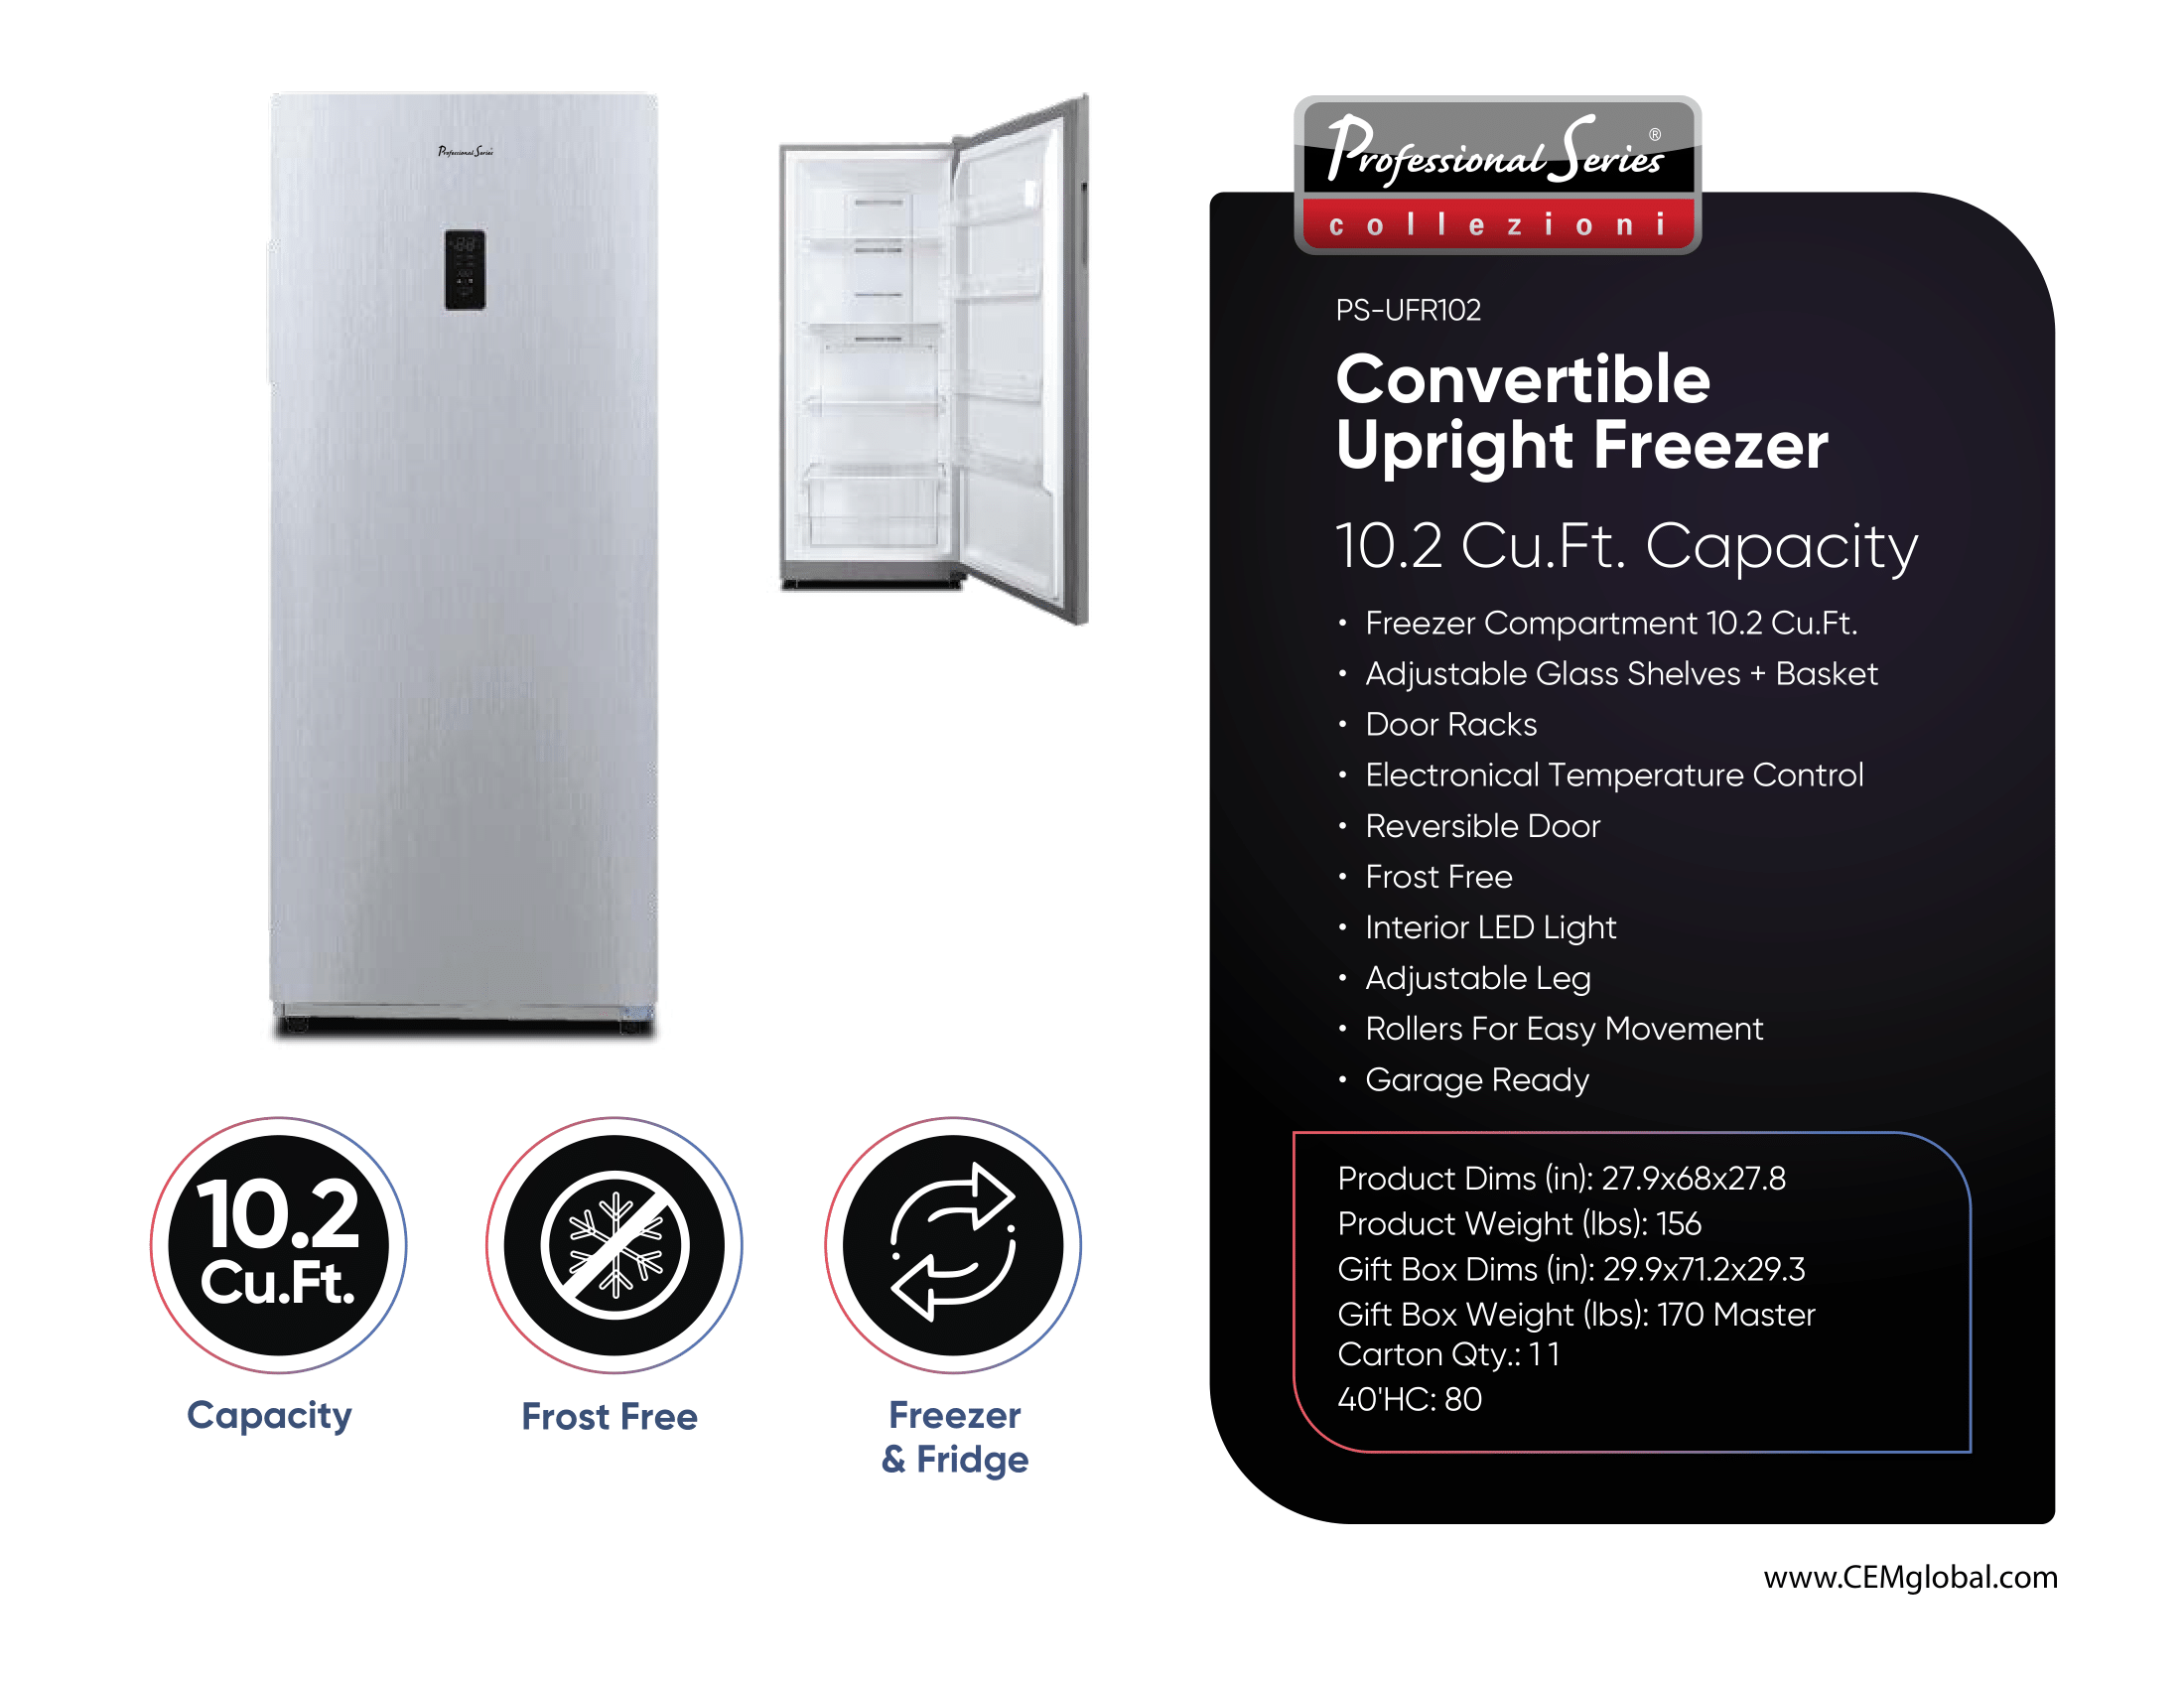 Convertible Upright Freezer 10.2 Cu.Ft.